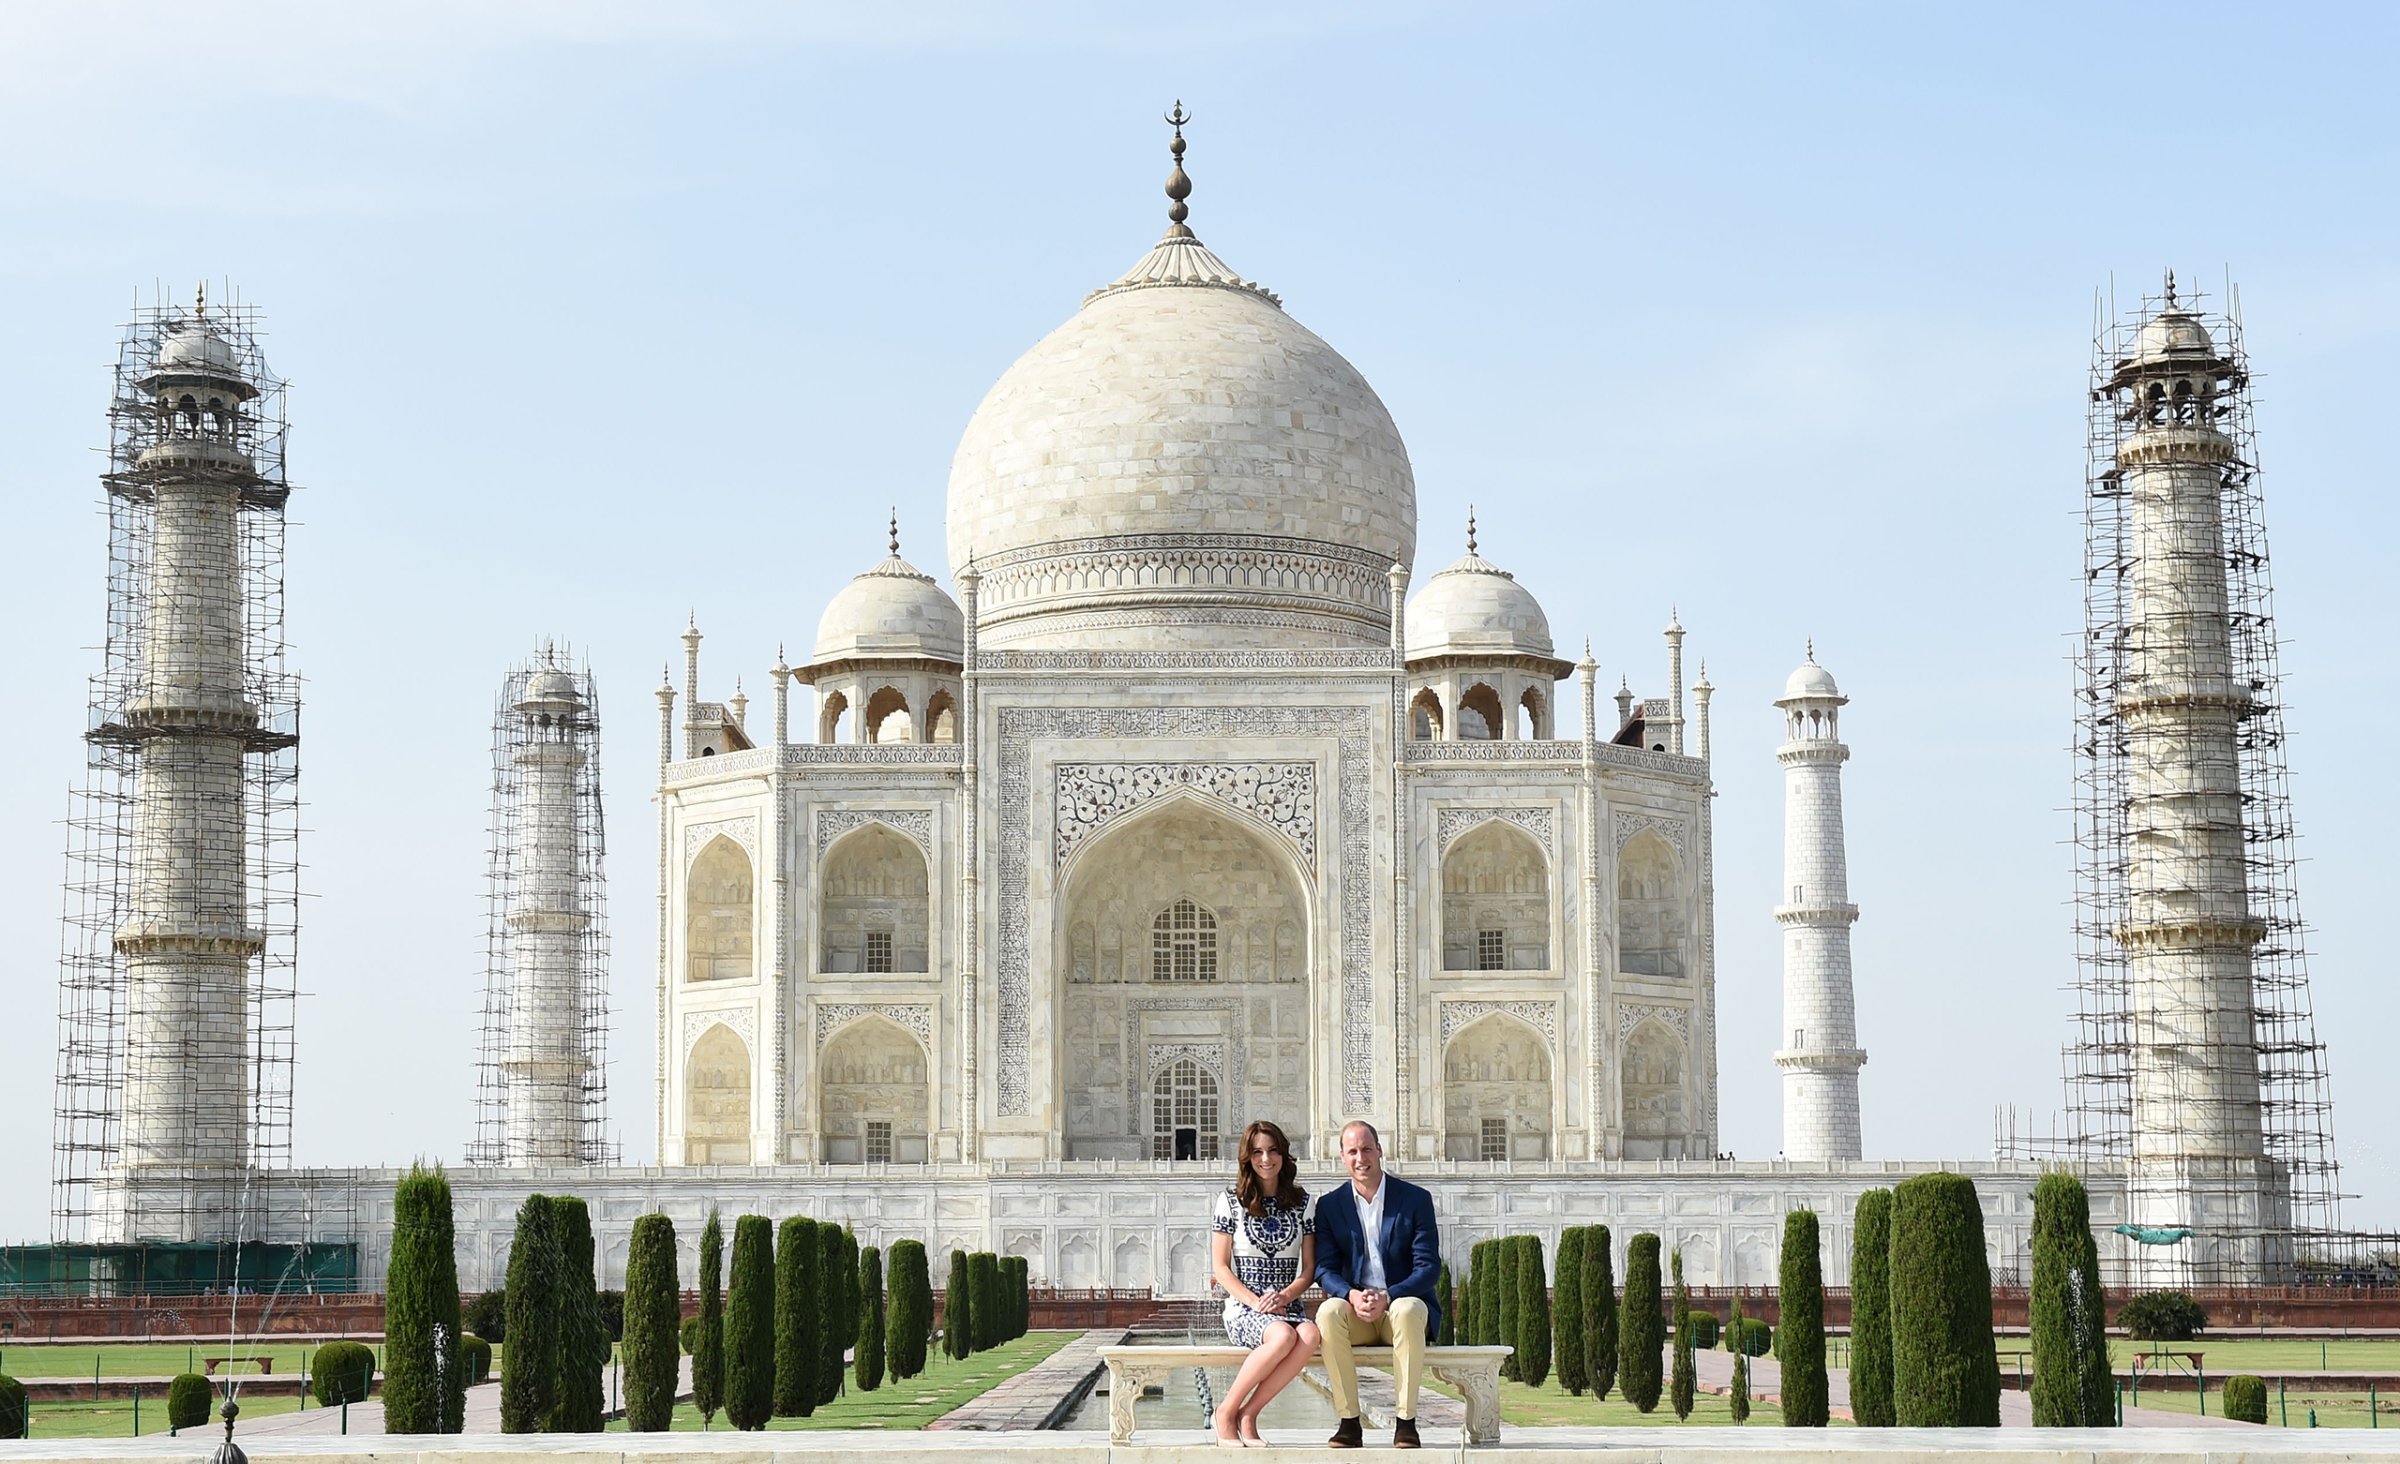 Prince William, Duke of Cambridge, and Catherine, Duchess of Cambridge, pose at The Taj Mahal in Agra, India, April 16, 2016.